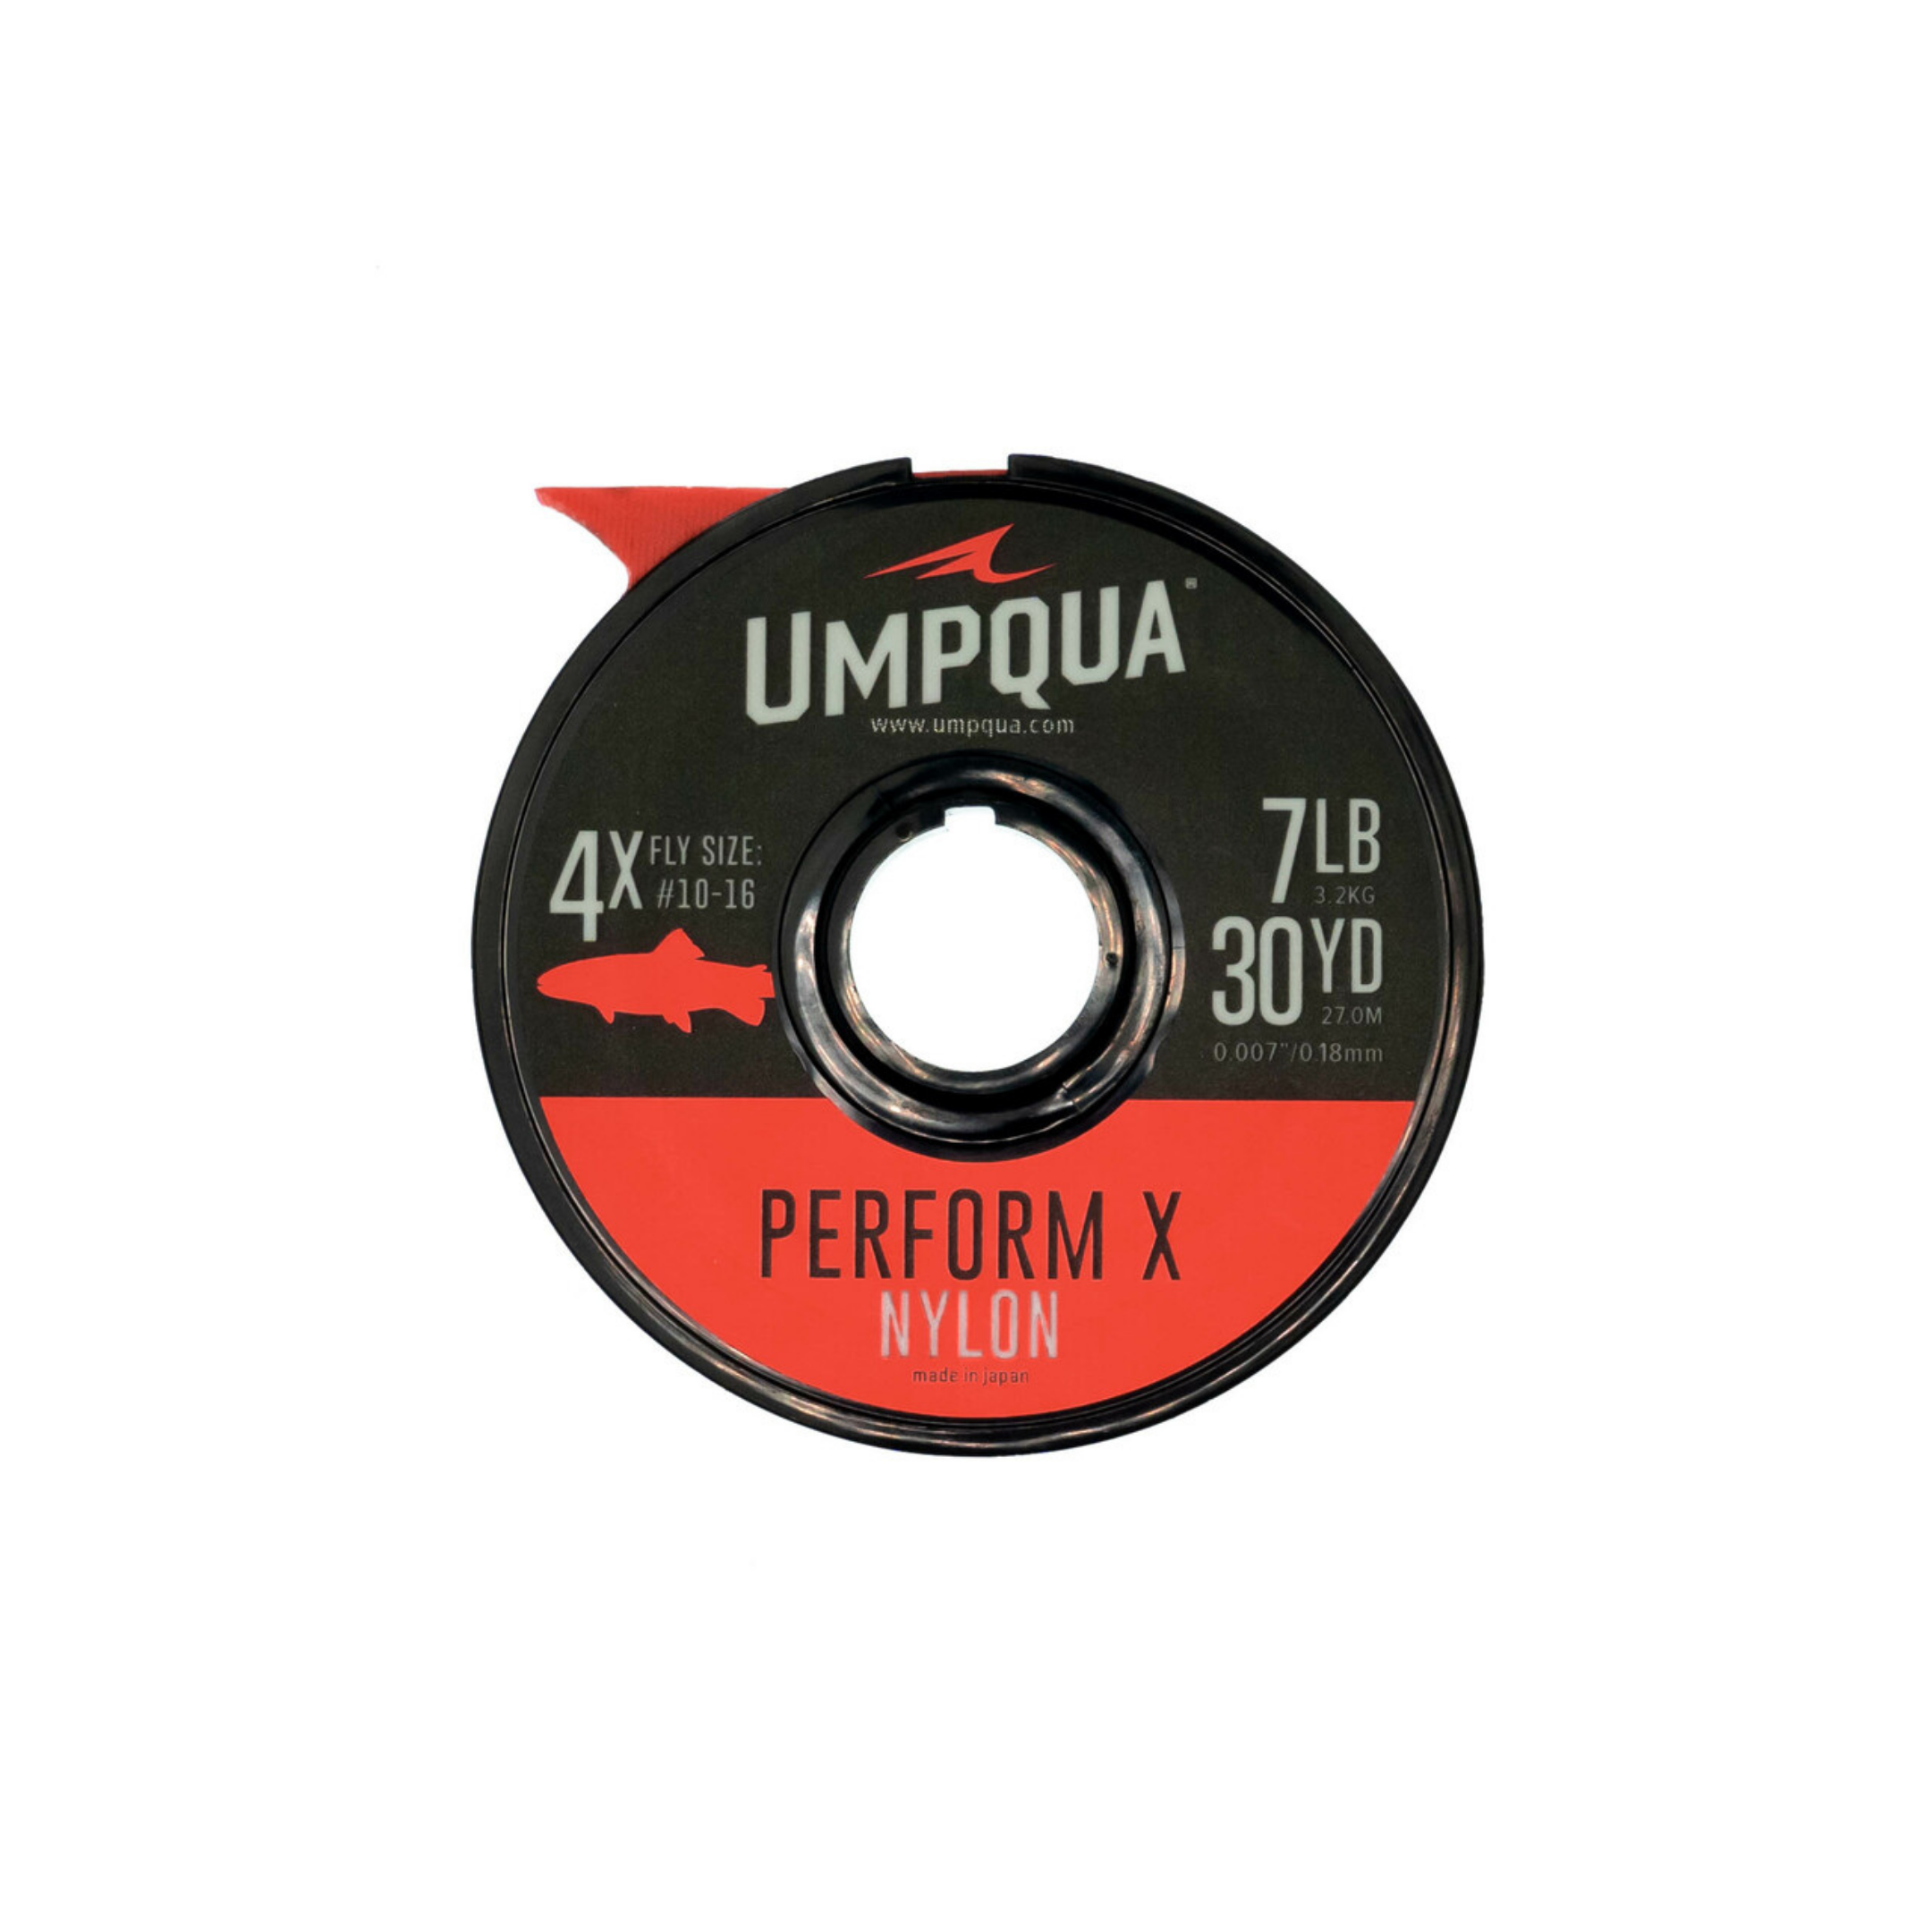 Umpqua Perform X Nylon tippet  Umpqua Feather Merchants – Fly and